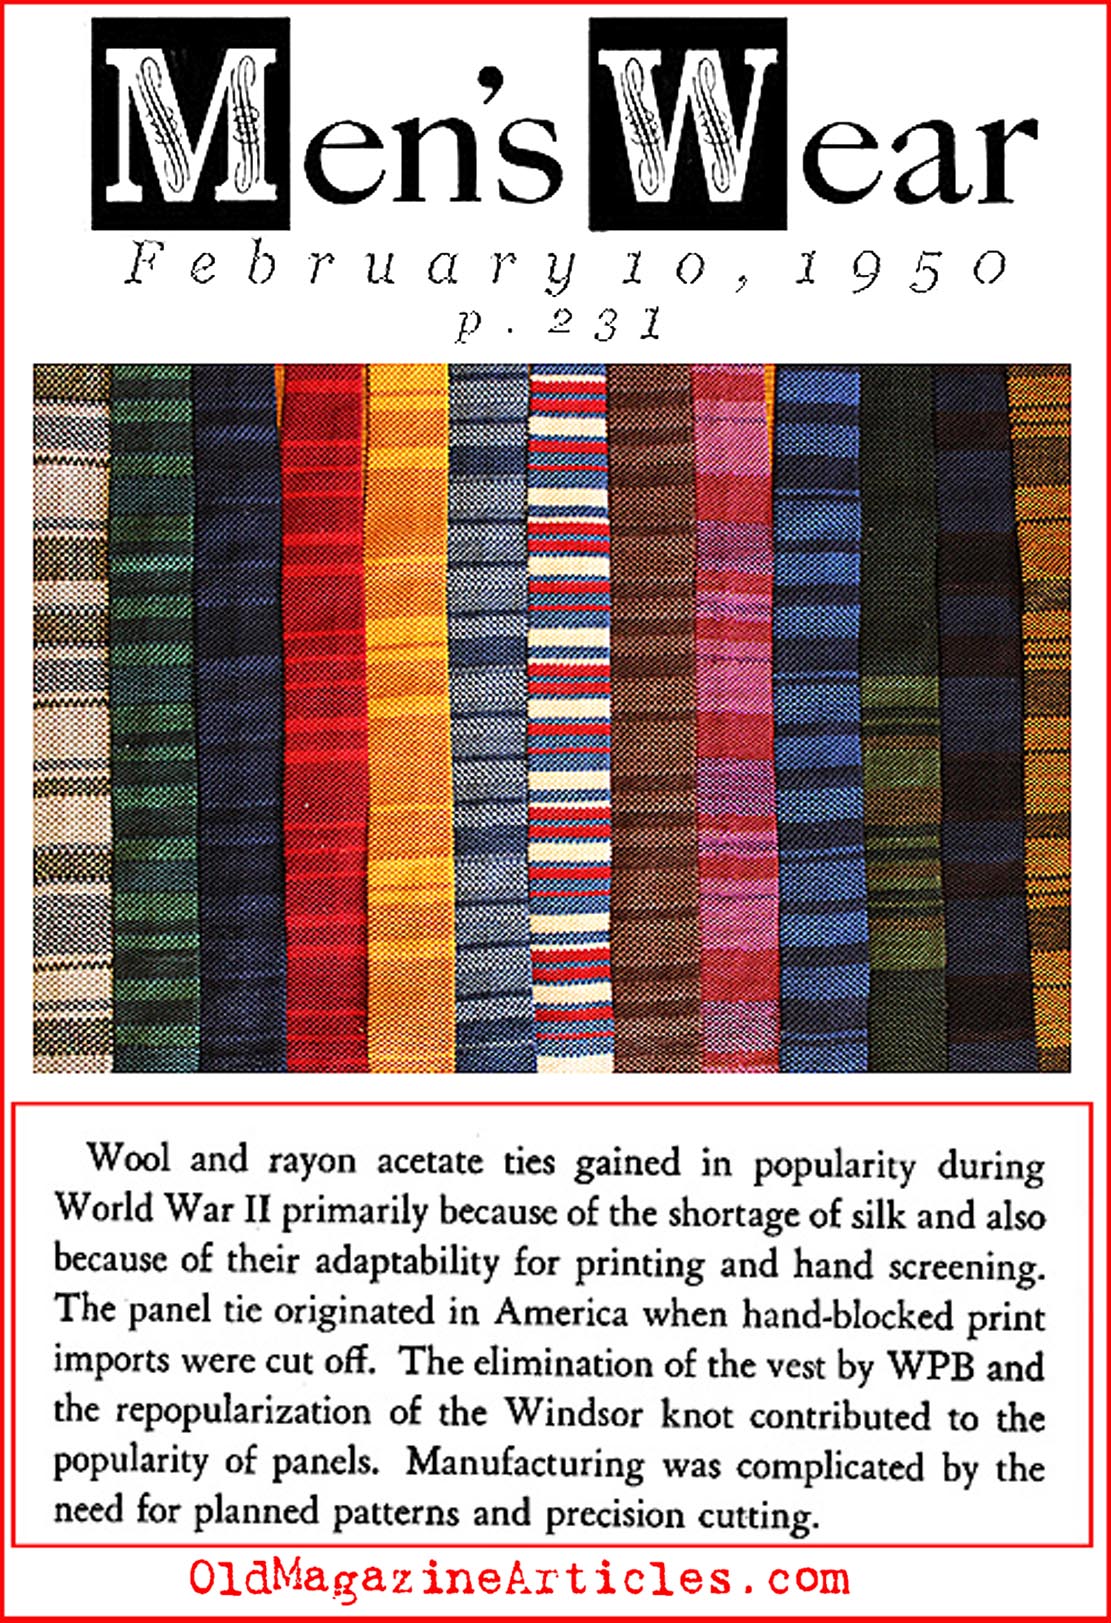 Neckties During the War Years (Men's Wear Magazine, 1950)